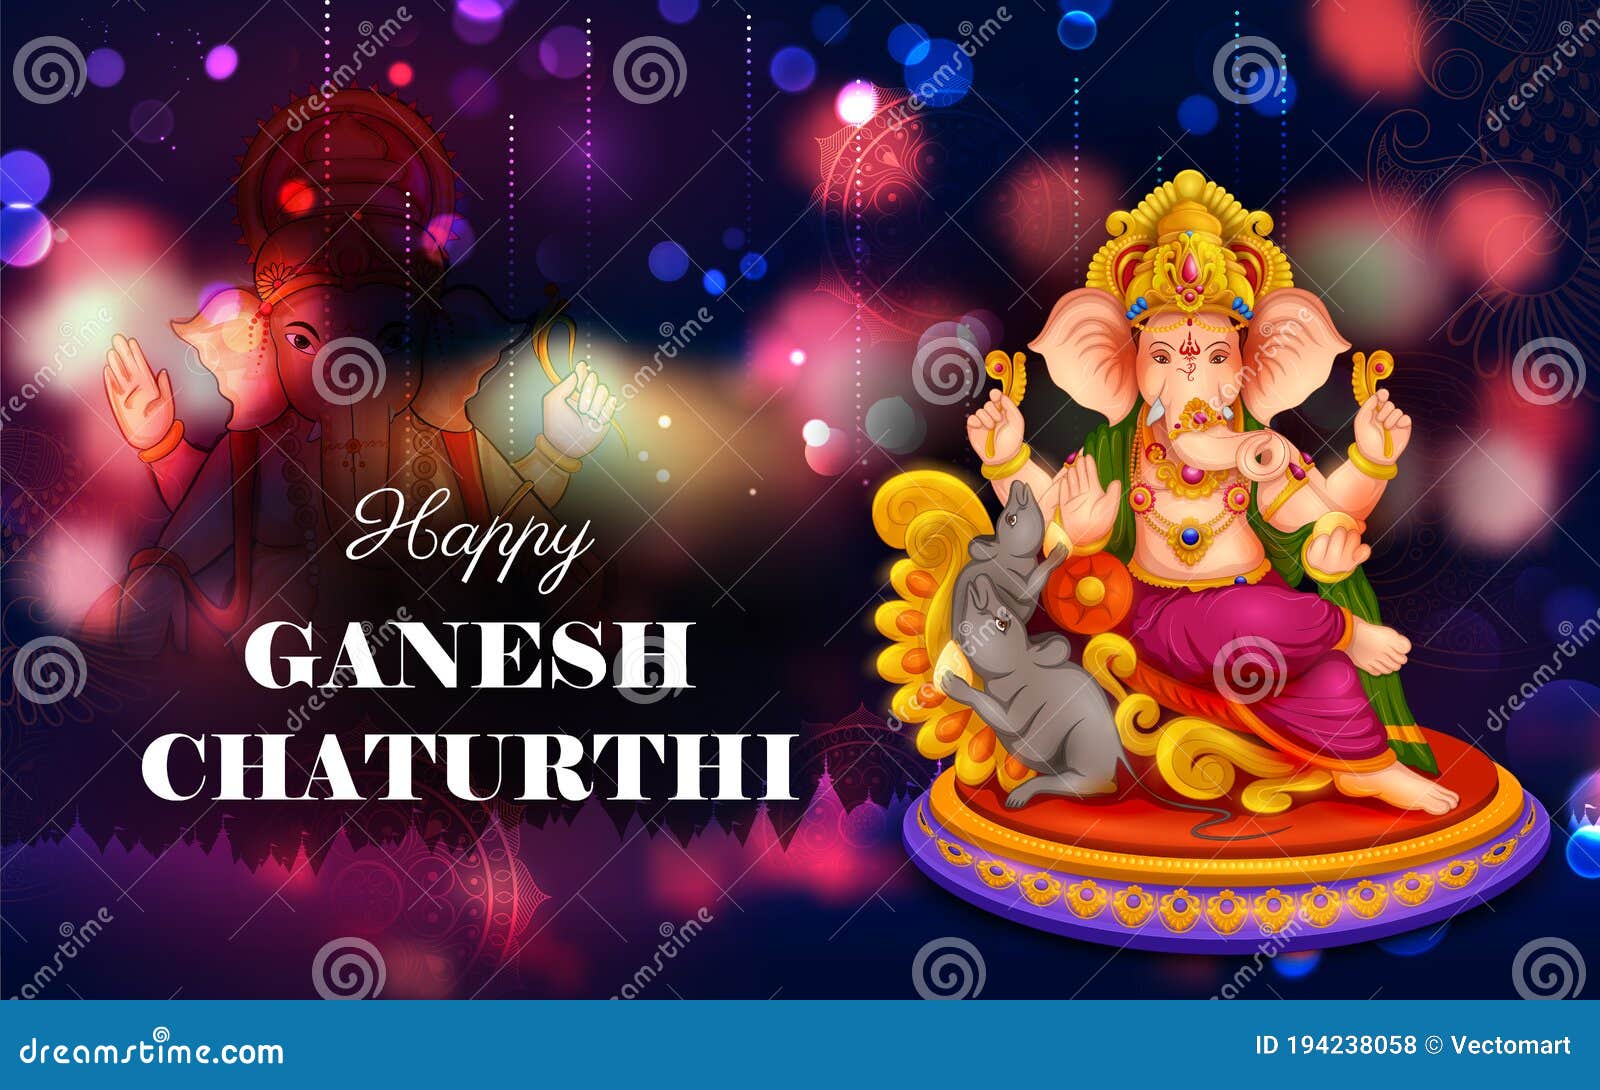 Indian People Celebrating Lord Ganpati Background for Ganesh ...